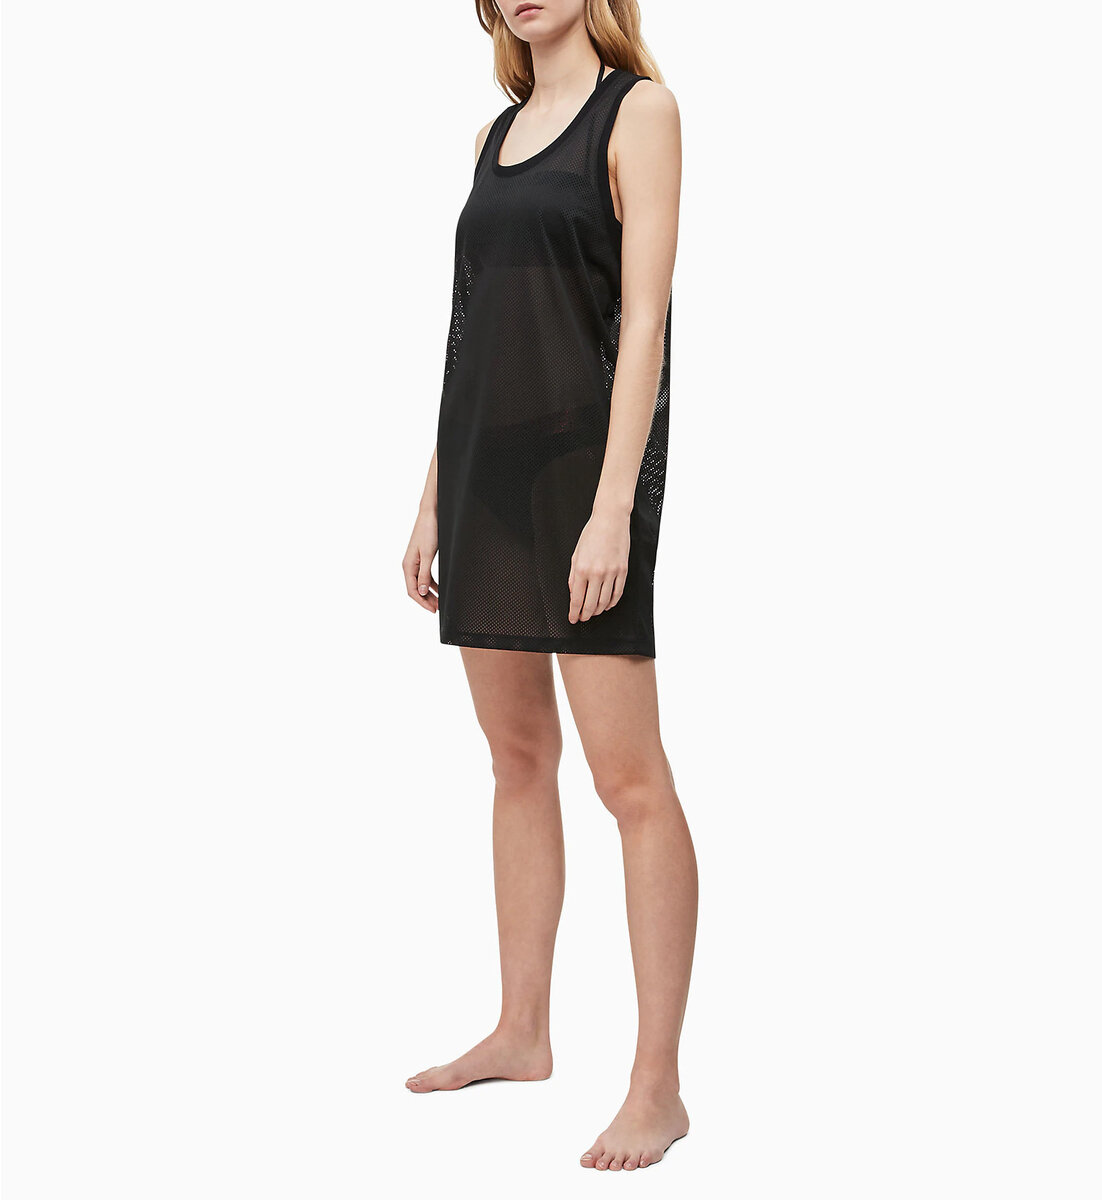 Dámské plážové šaty O8TM5 černá - Calvin Klein, černá L i10_P37916_1:3_2:90_